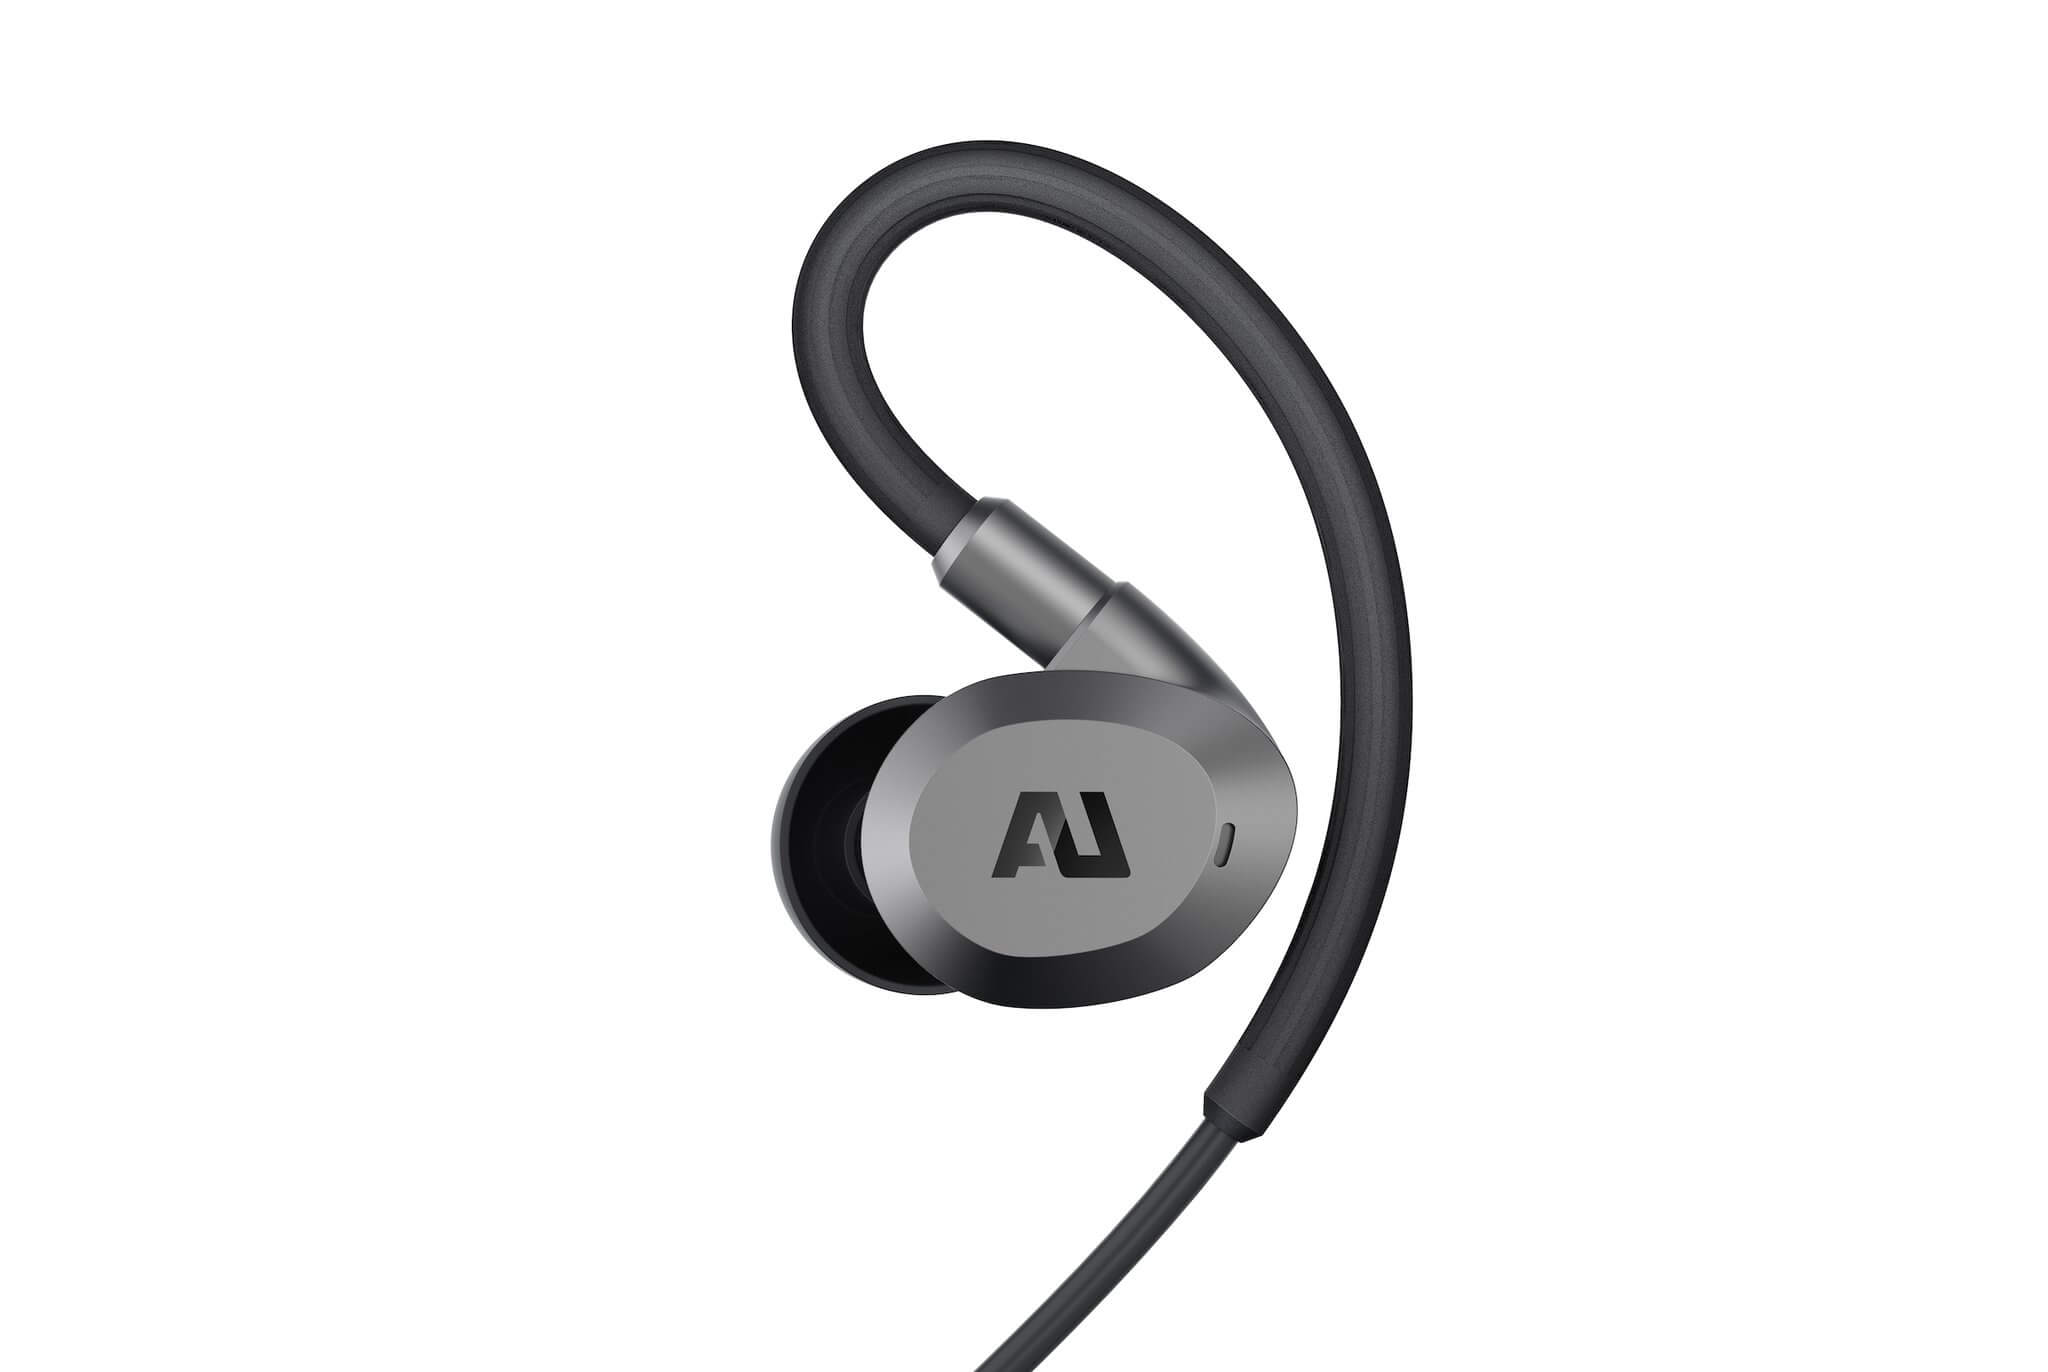 REVIEW: Ausounds AU-Flex ANC Wireless Neckband Earphones